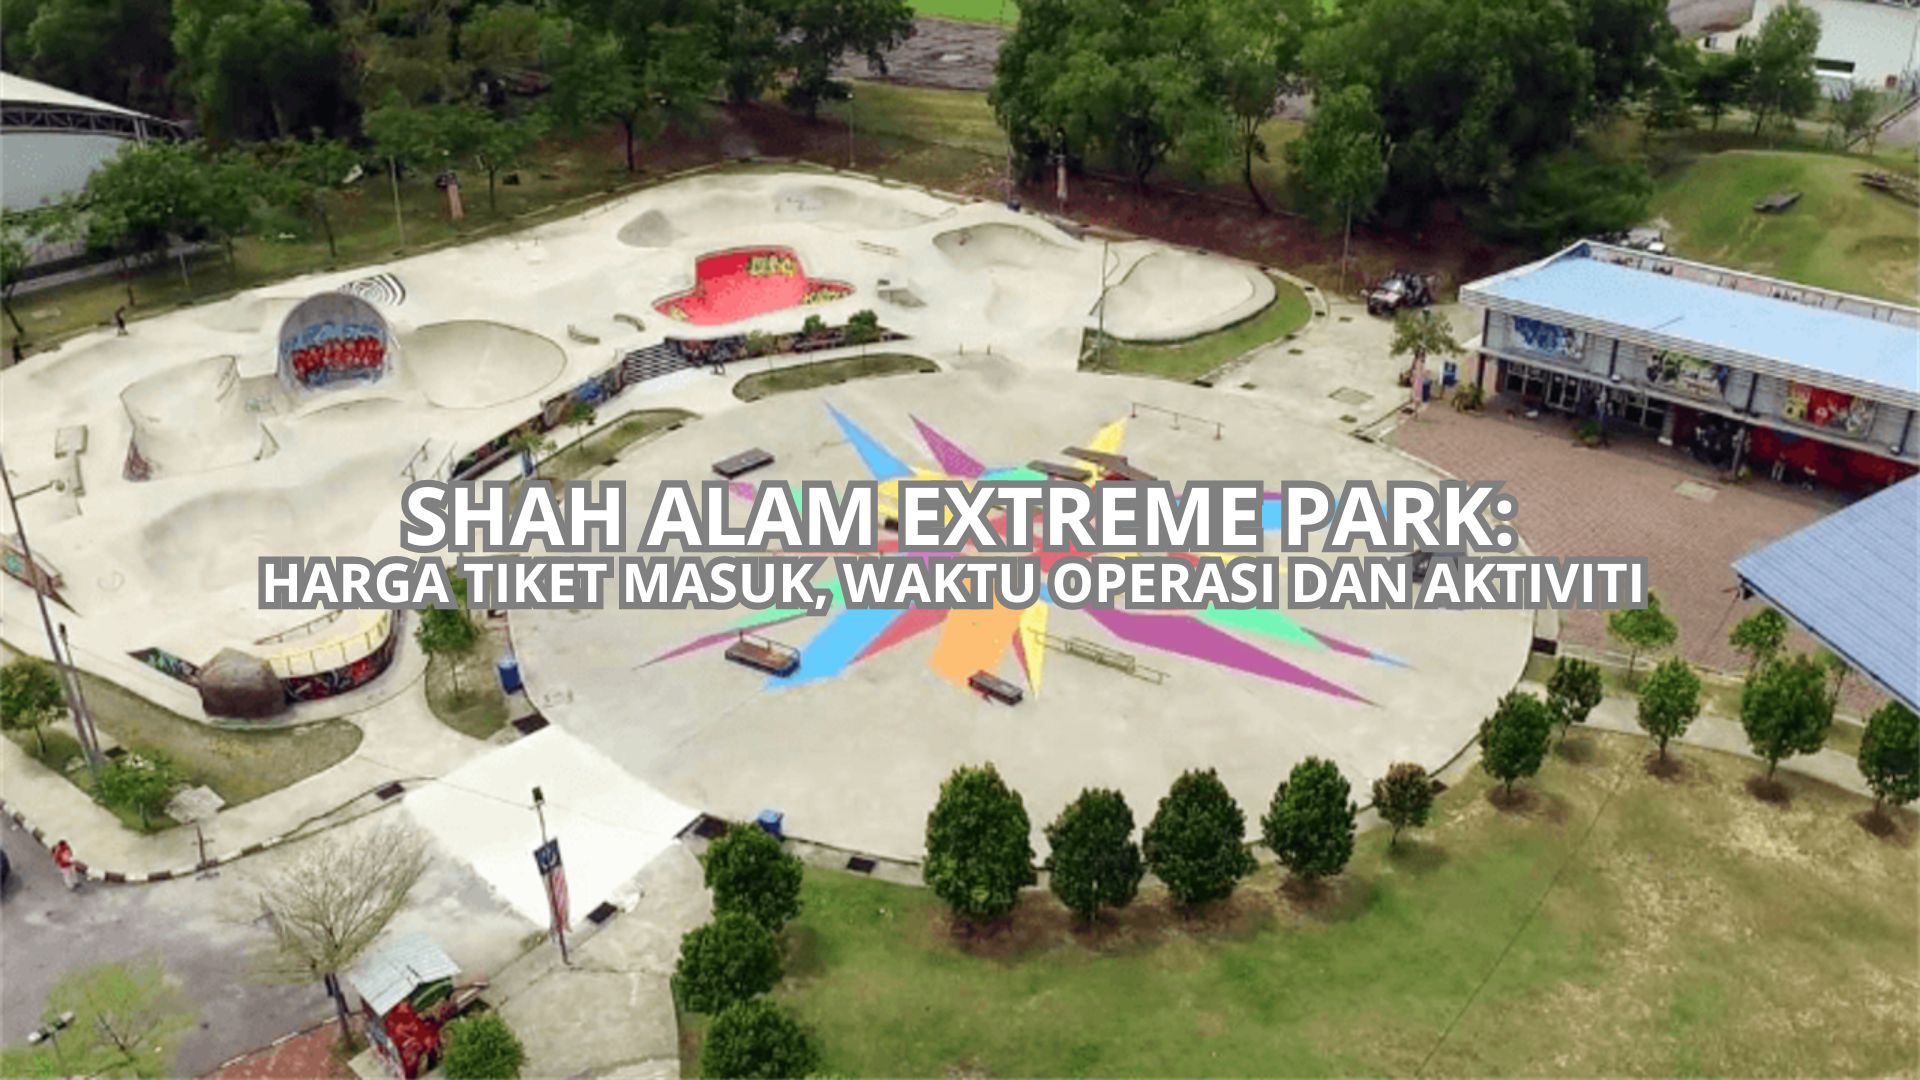 Shah Alam Extreme Park Cover